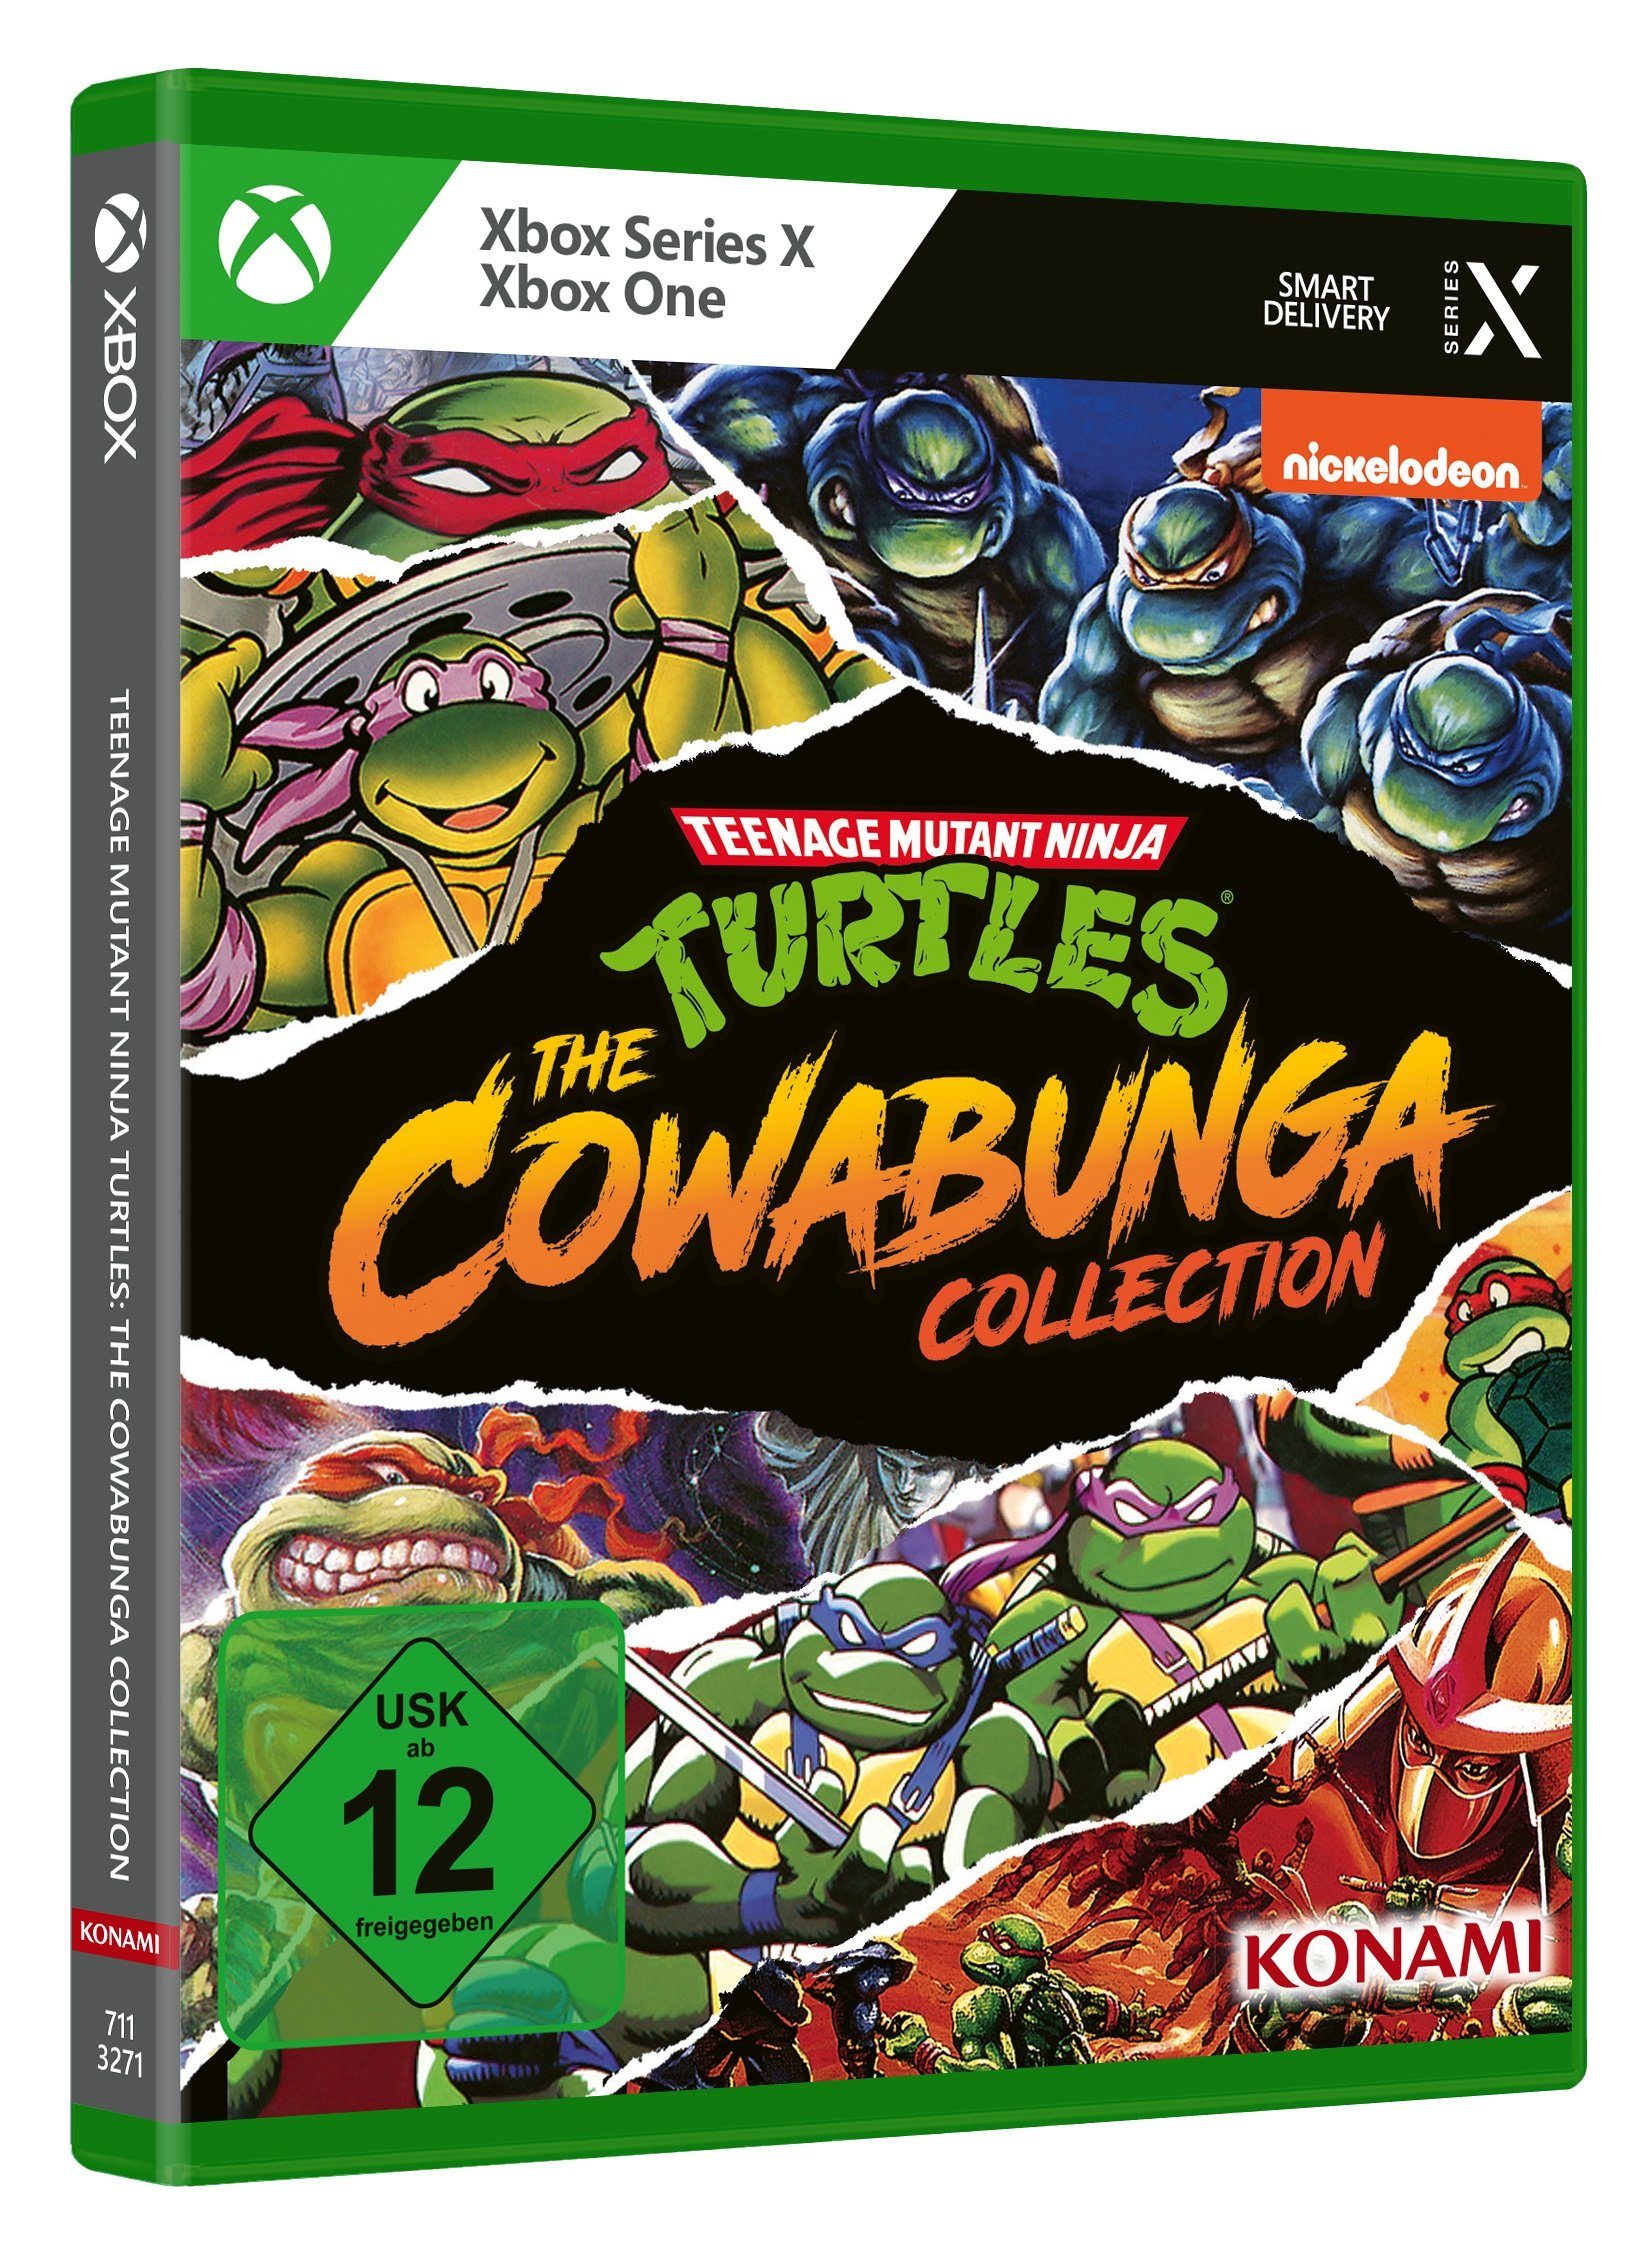 Konami Teenage Mutant Ninja Series Cowabunga The Turtles - X Xbox Xbox One, Collection